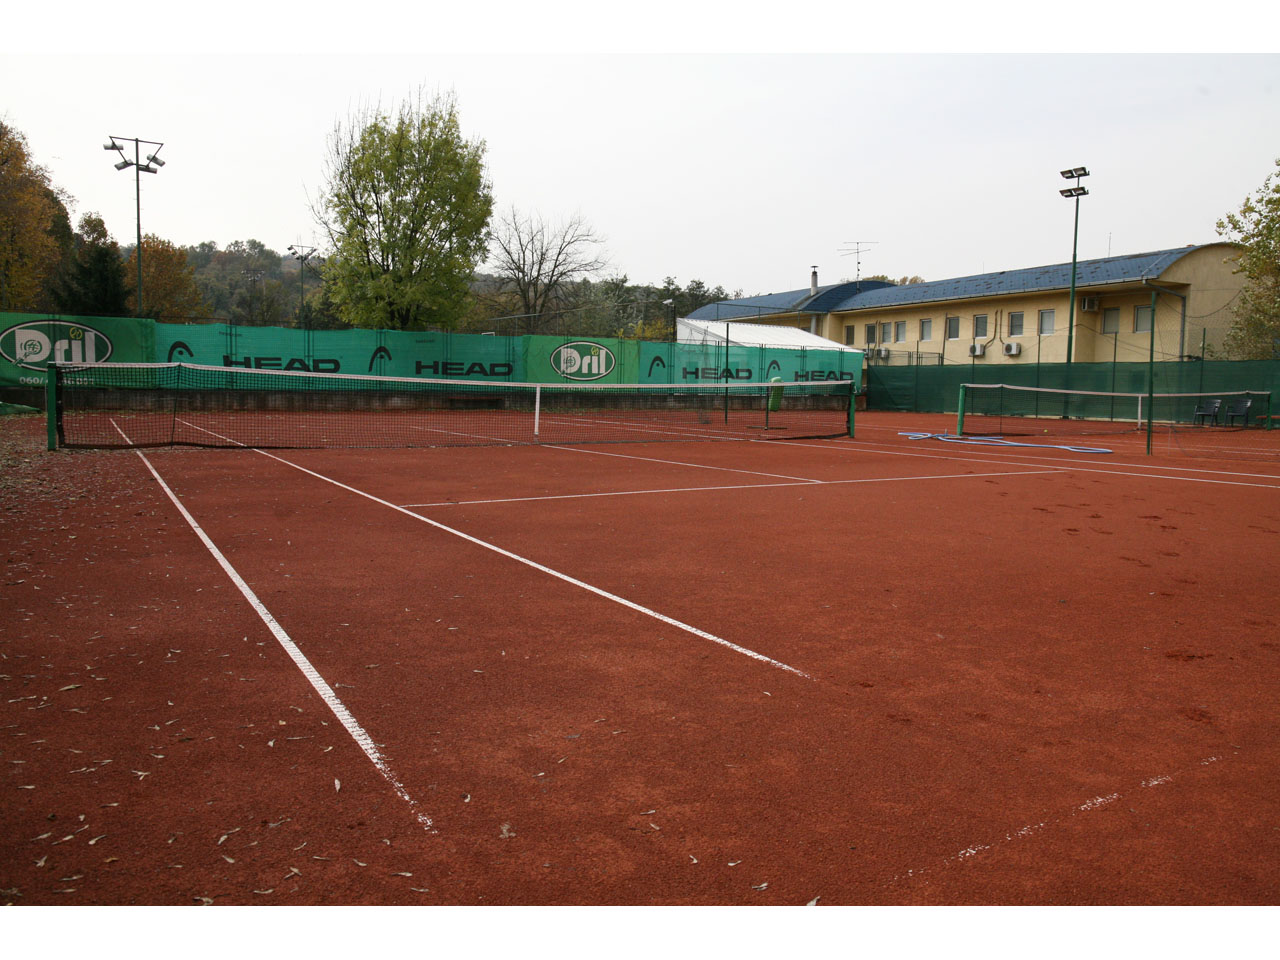 DRIL TENNIS CLUB Tennis courts, tennis schools, tennis clubs Belgrade - Photo 1